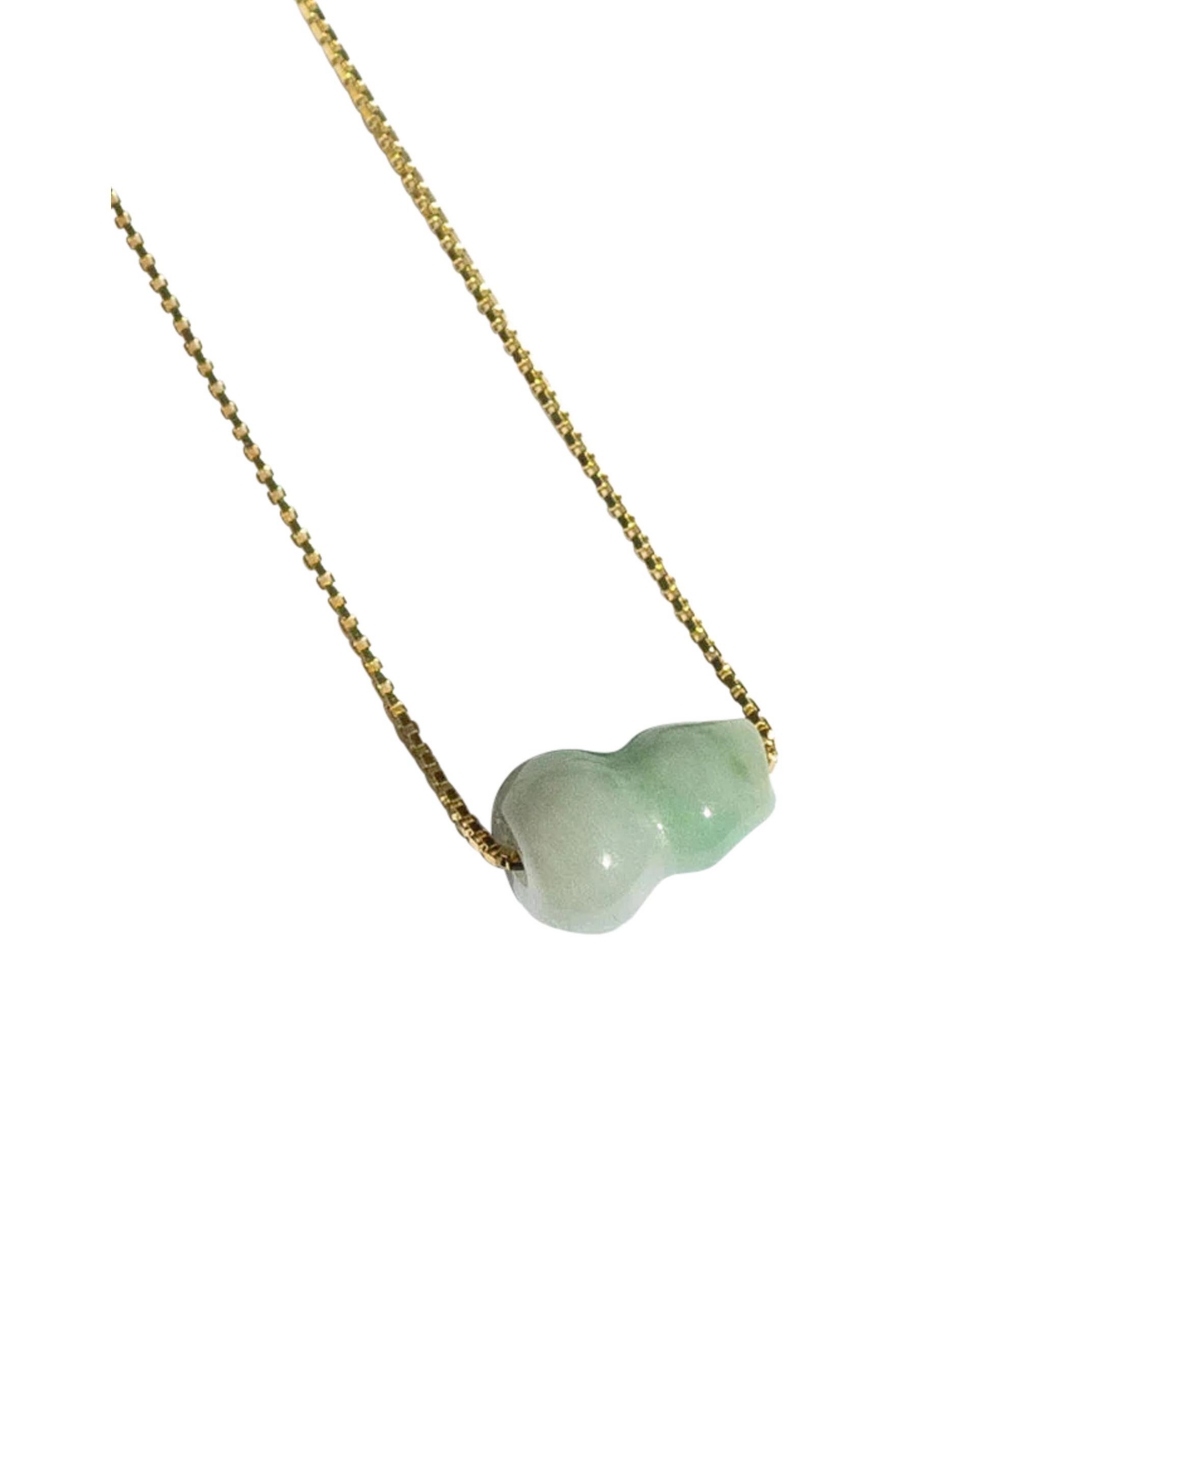 Mini bottle - Jade pendant necklace - Light/pastel green